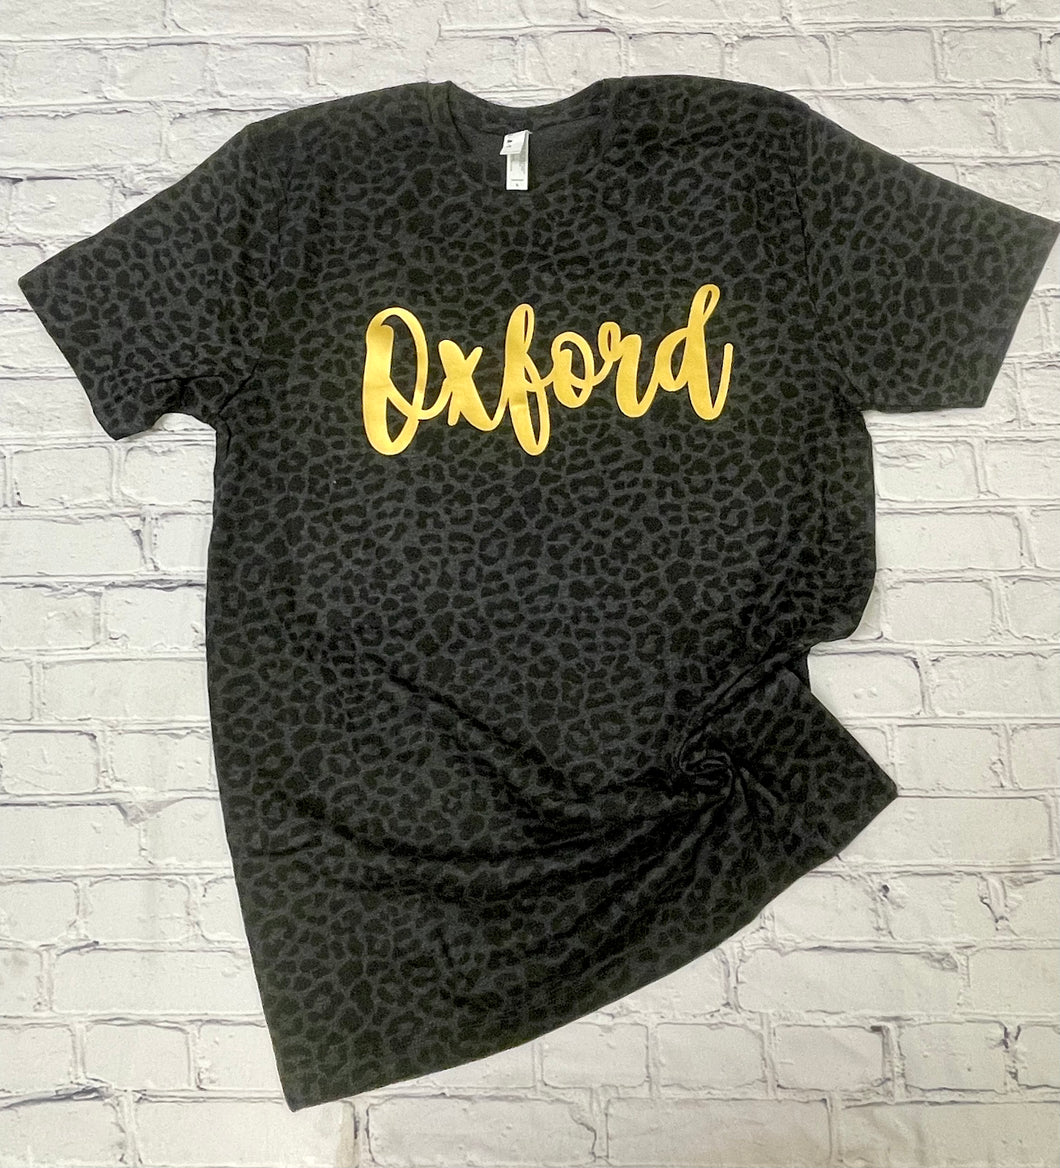 Oxford Black Cheetah shirt